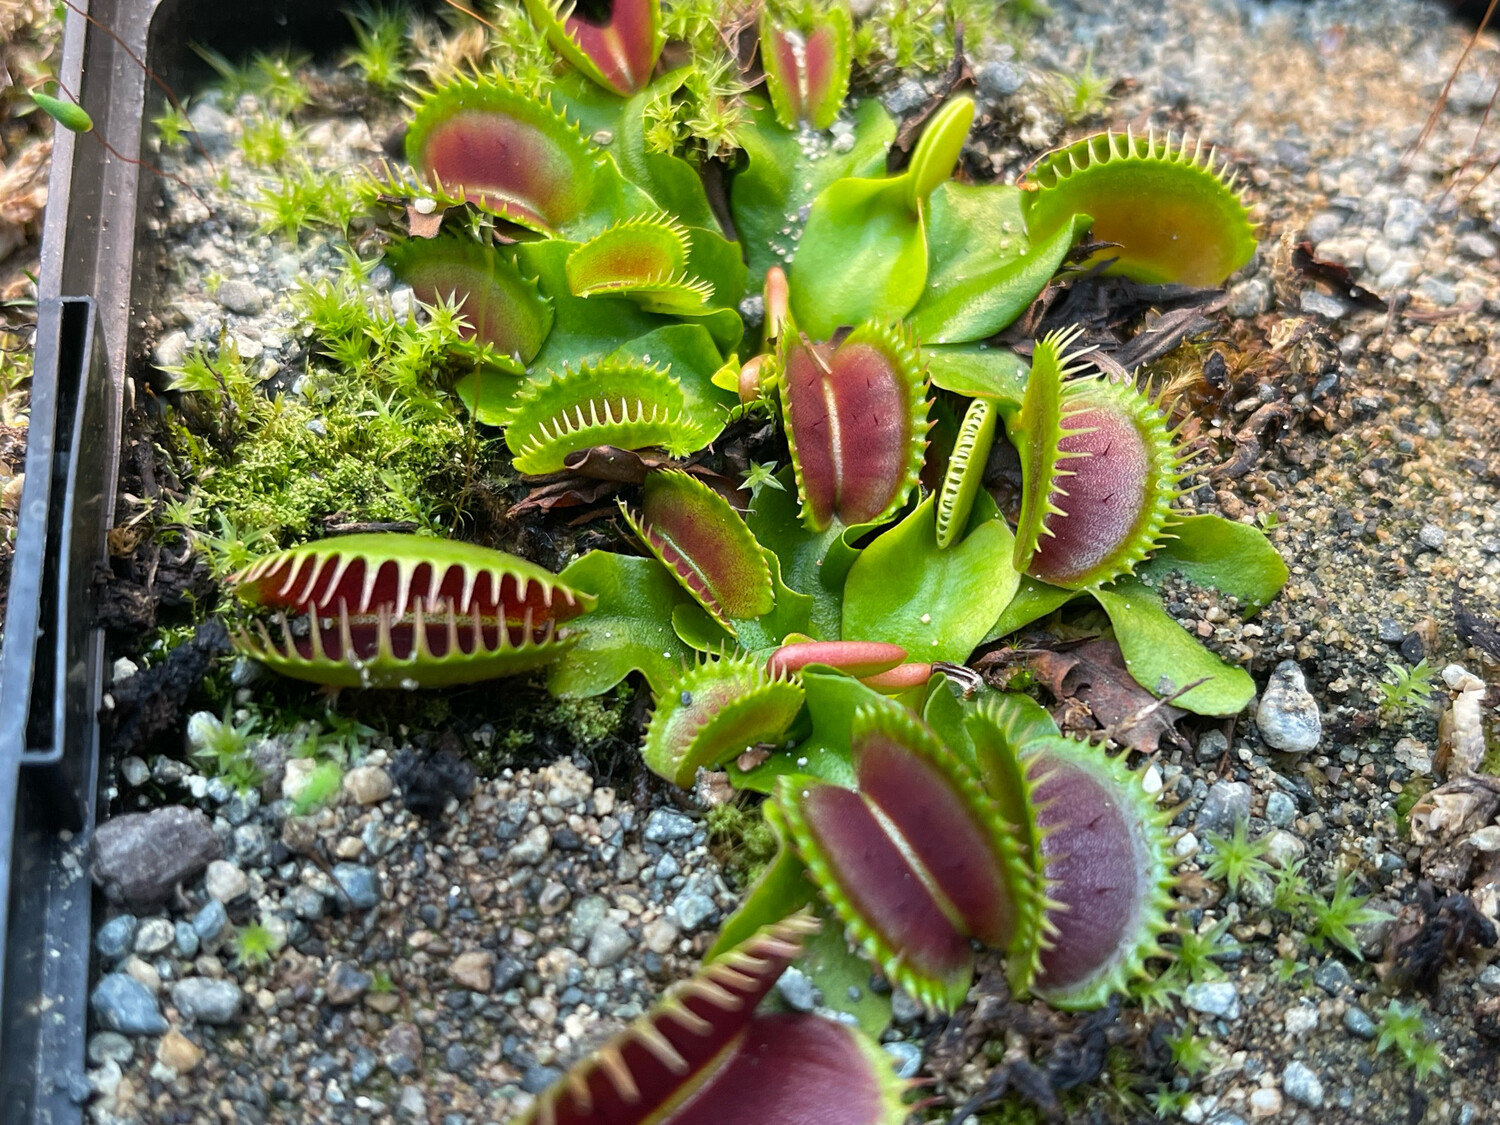 Dionaea muscipula “SL 15” Venus Flytrap (small) Very Limited! 